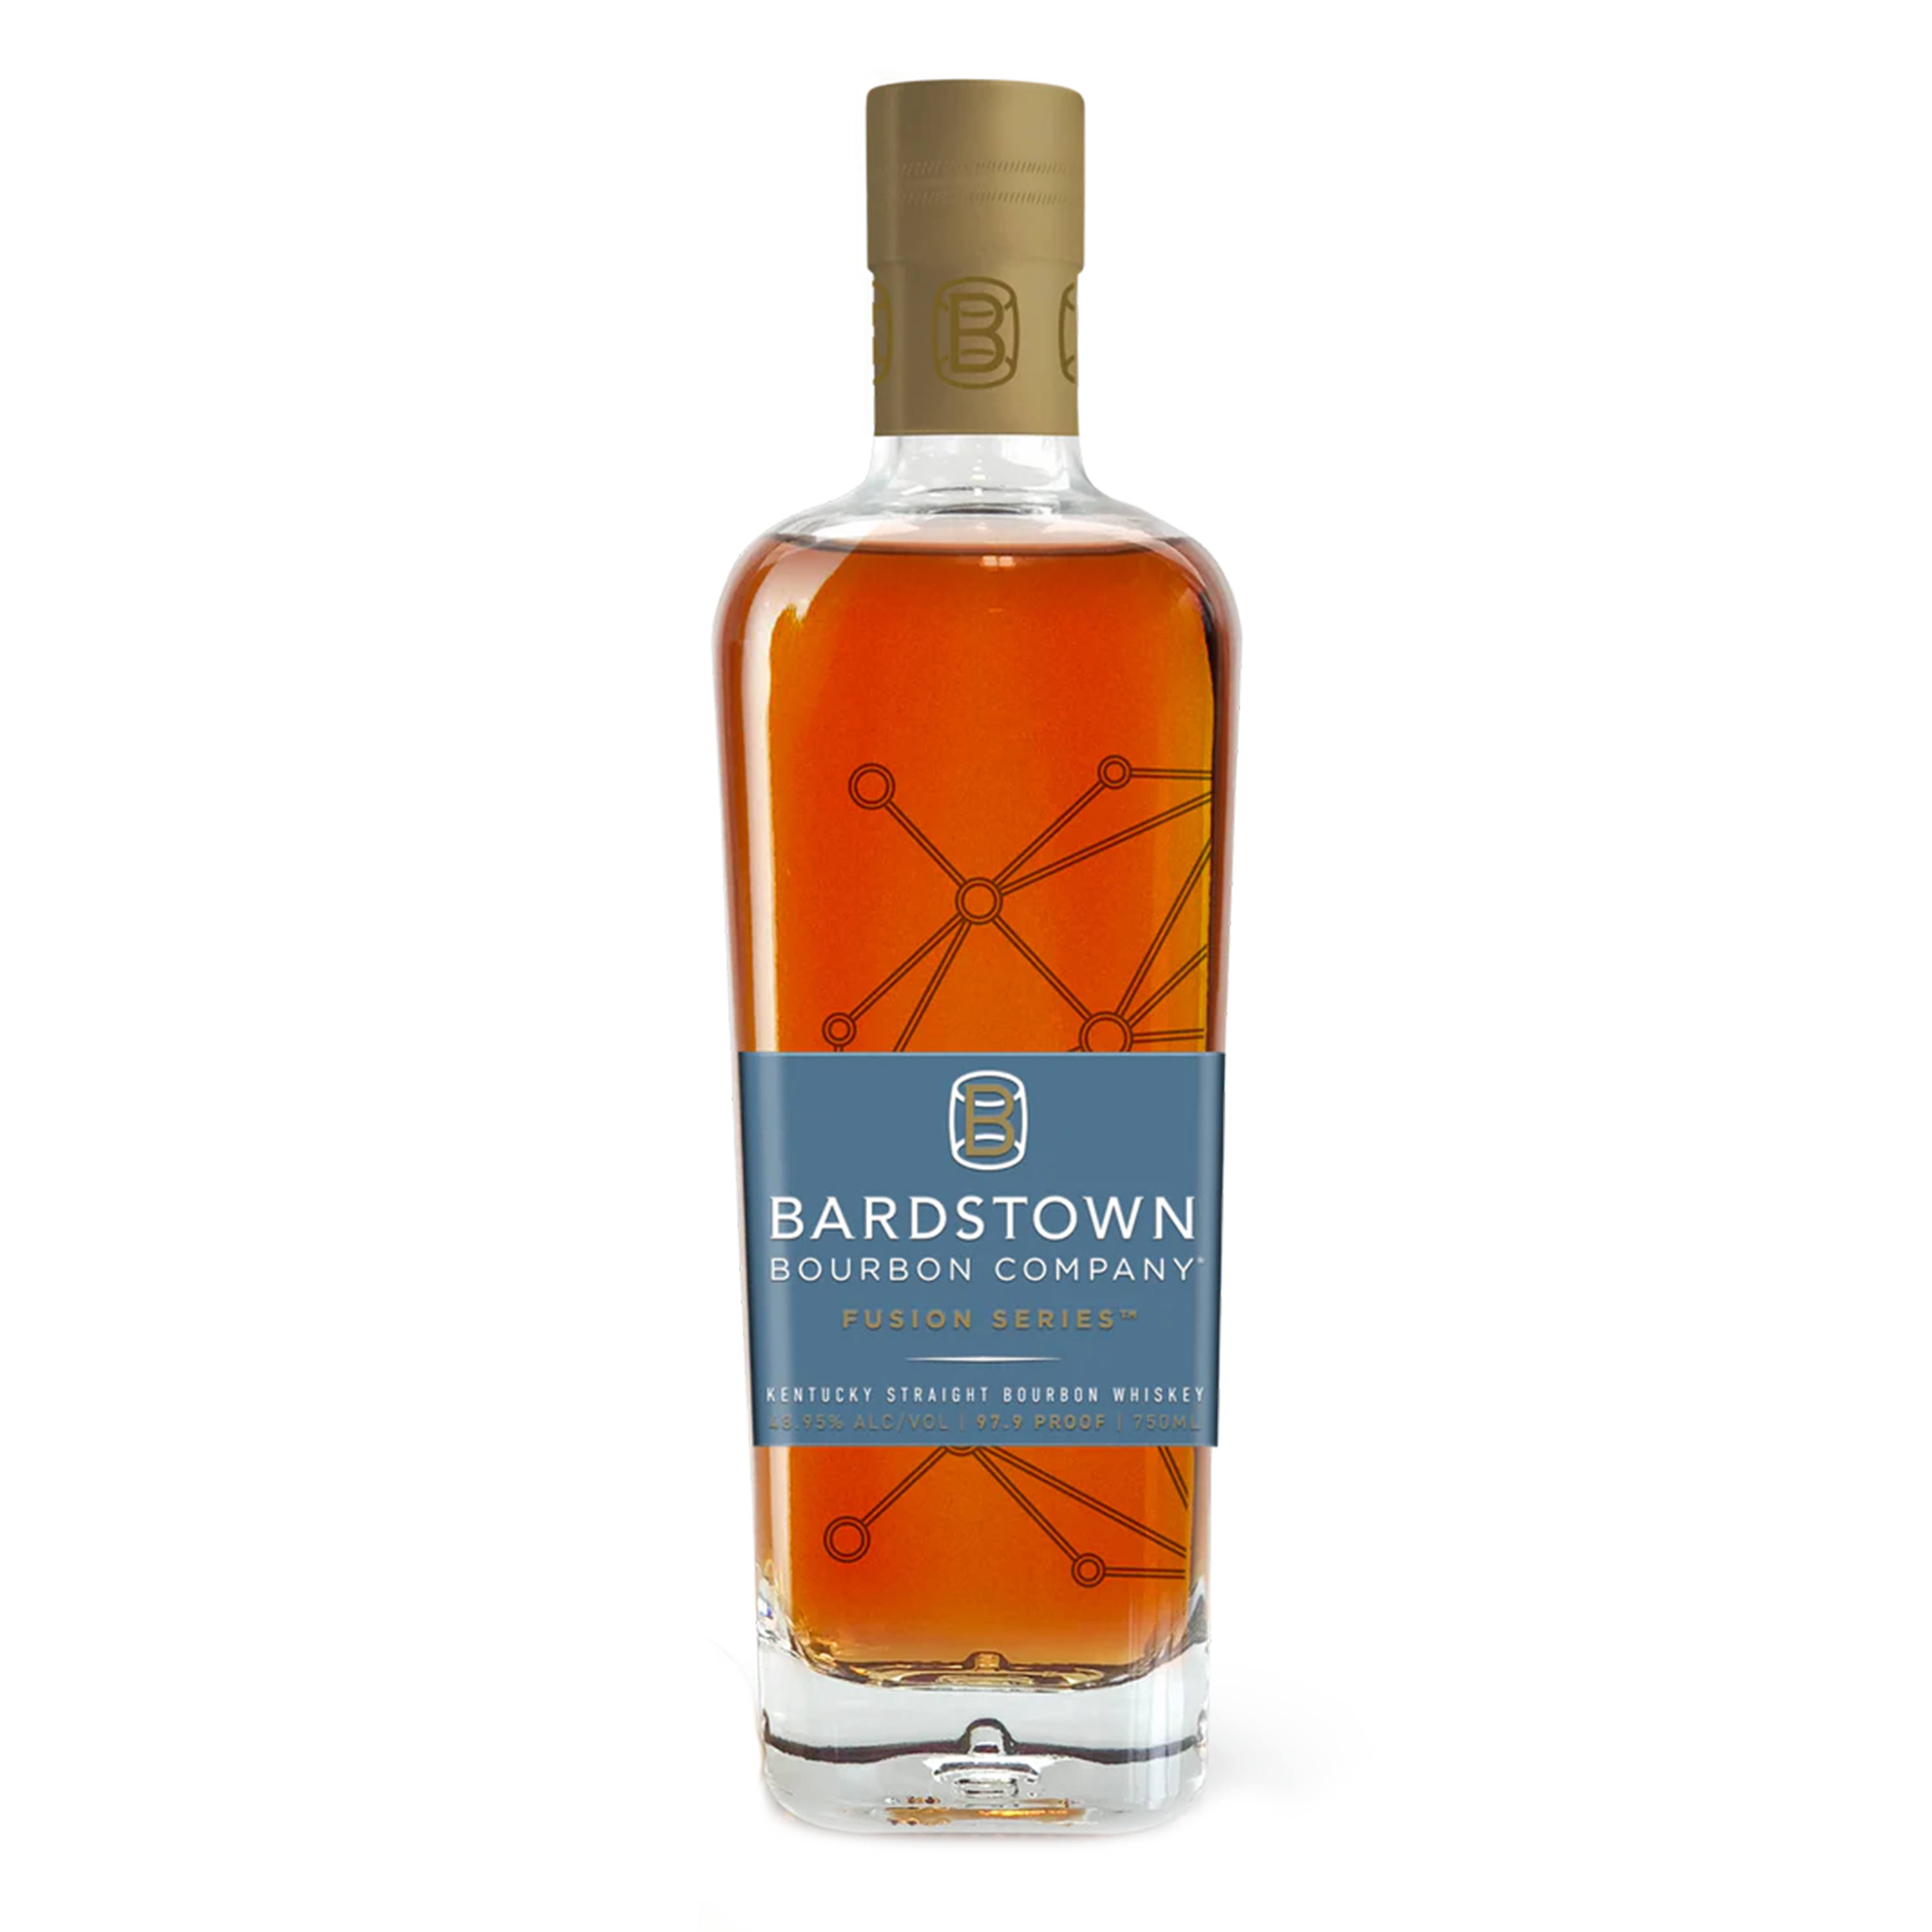 Bardstown Bourbon Company Fusion Series 5 Kentucky Straight Bourbon Whiskey 750ml Bottle